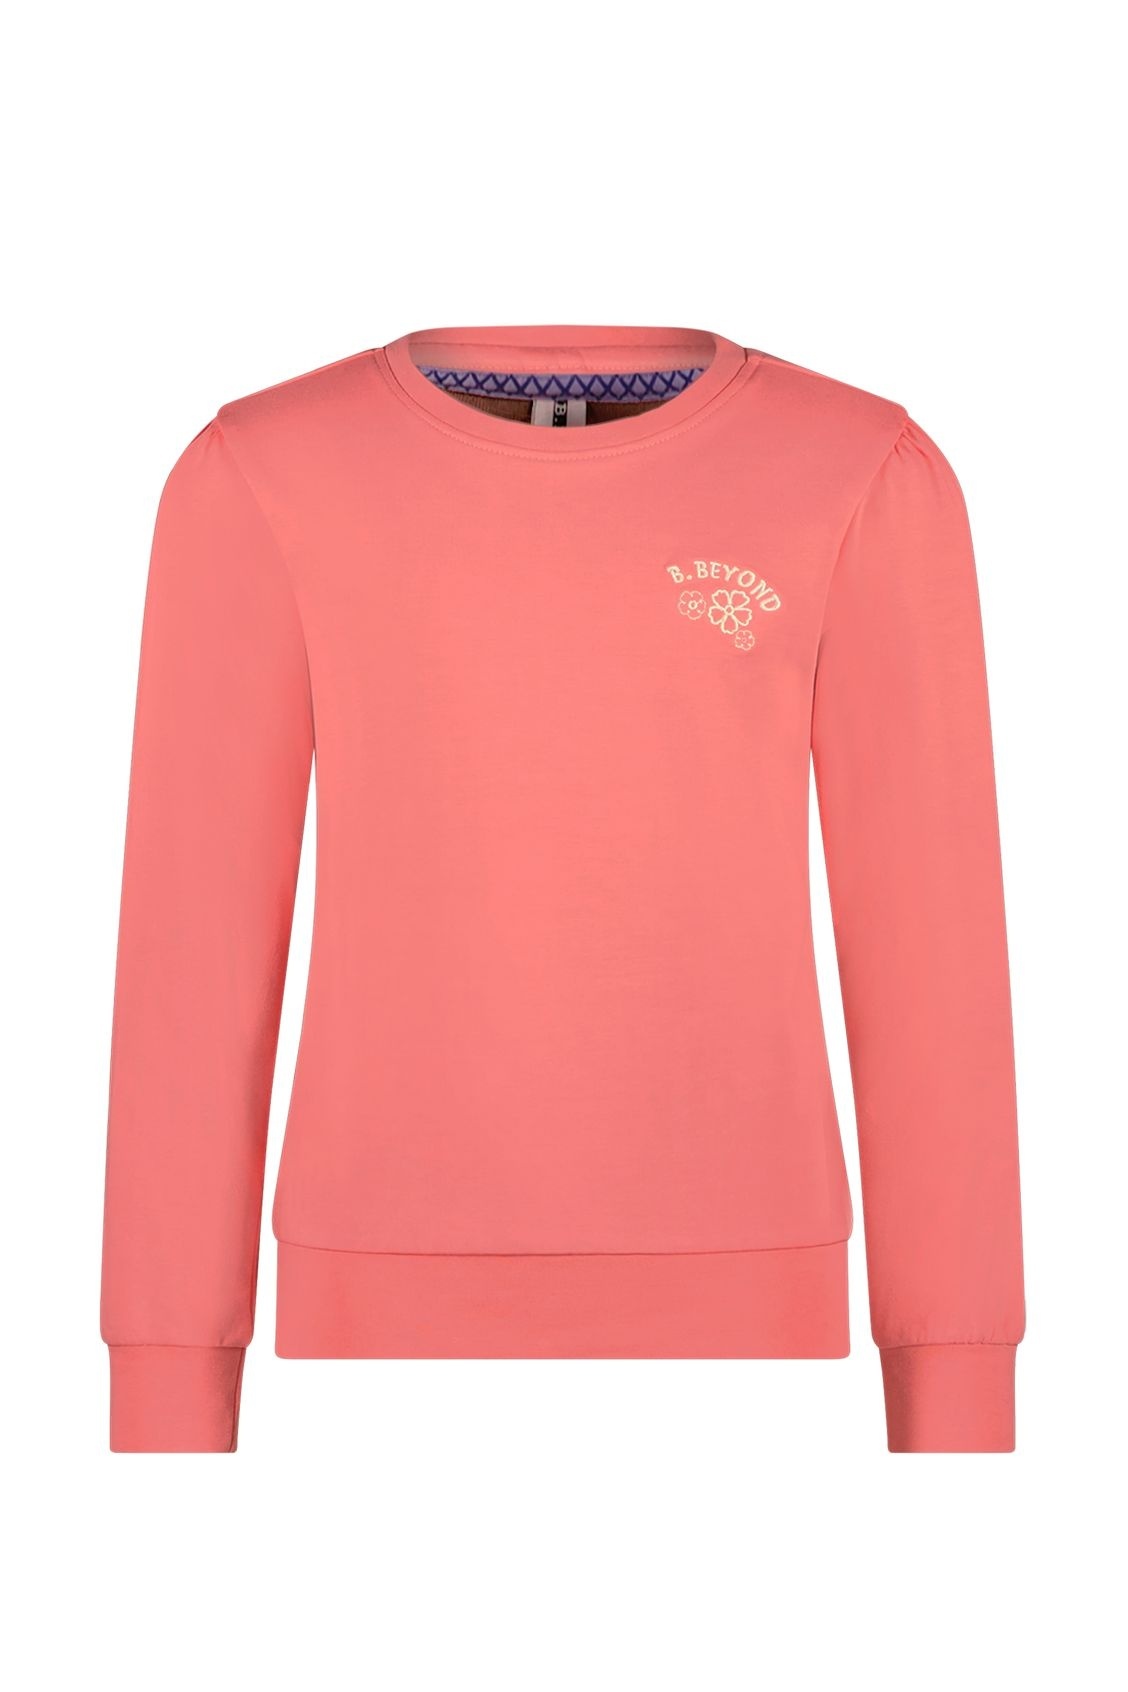 B.Nosy - Sweater Beau - Passion Pink - Maat 104